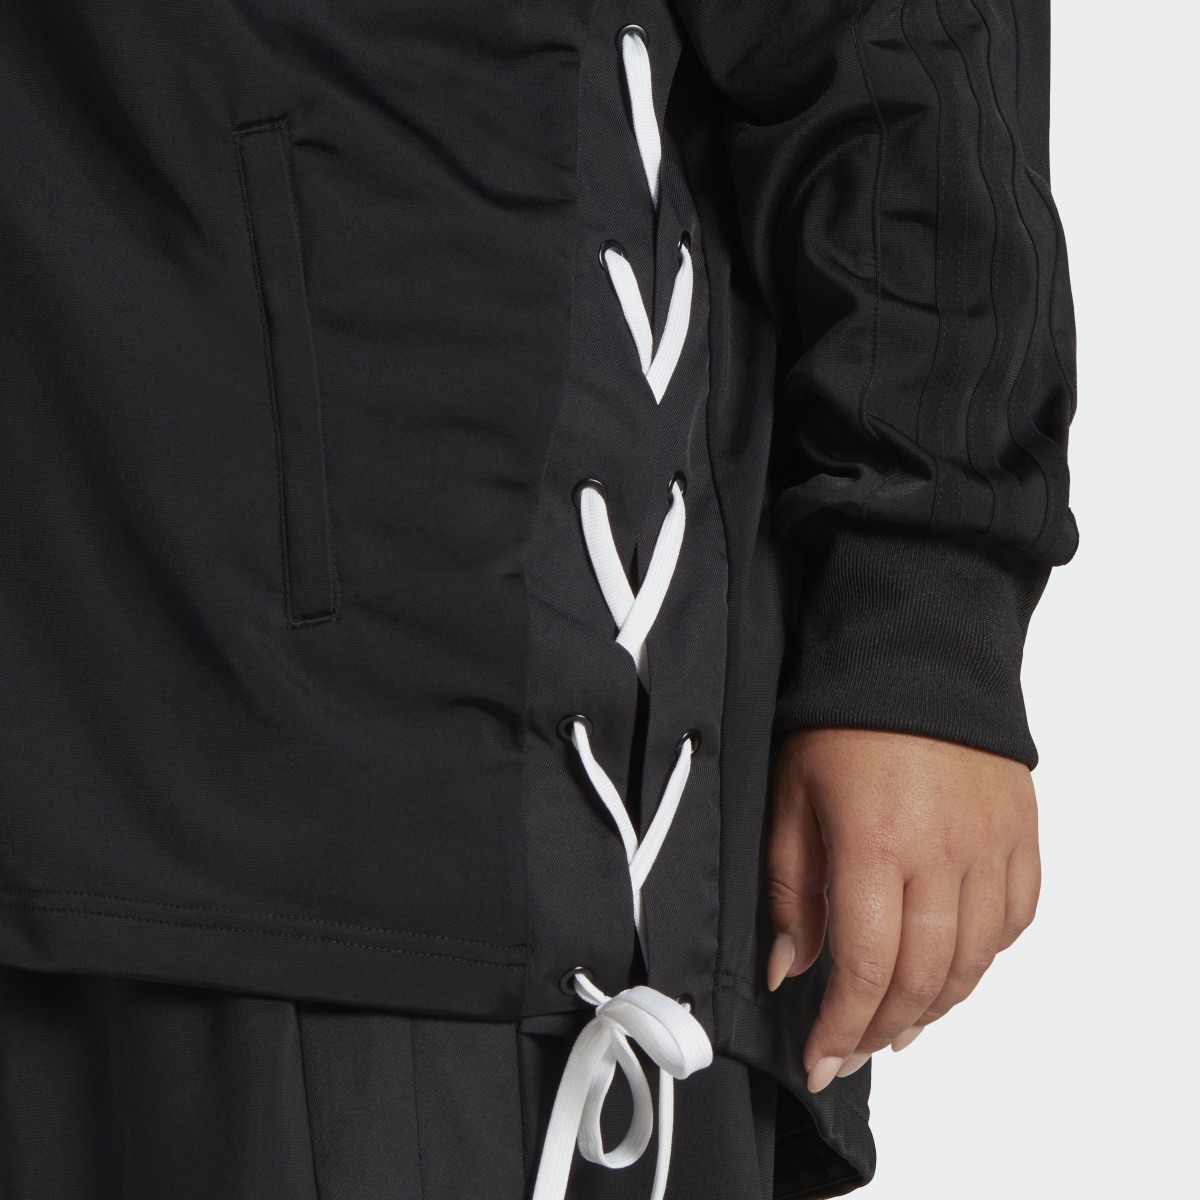 Adidas Always Original Laced Track Jacket (Plus Size). 7